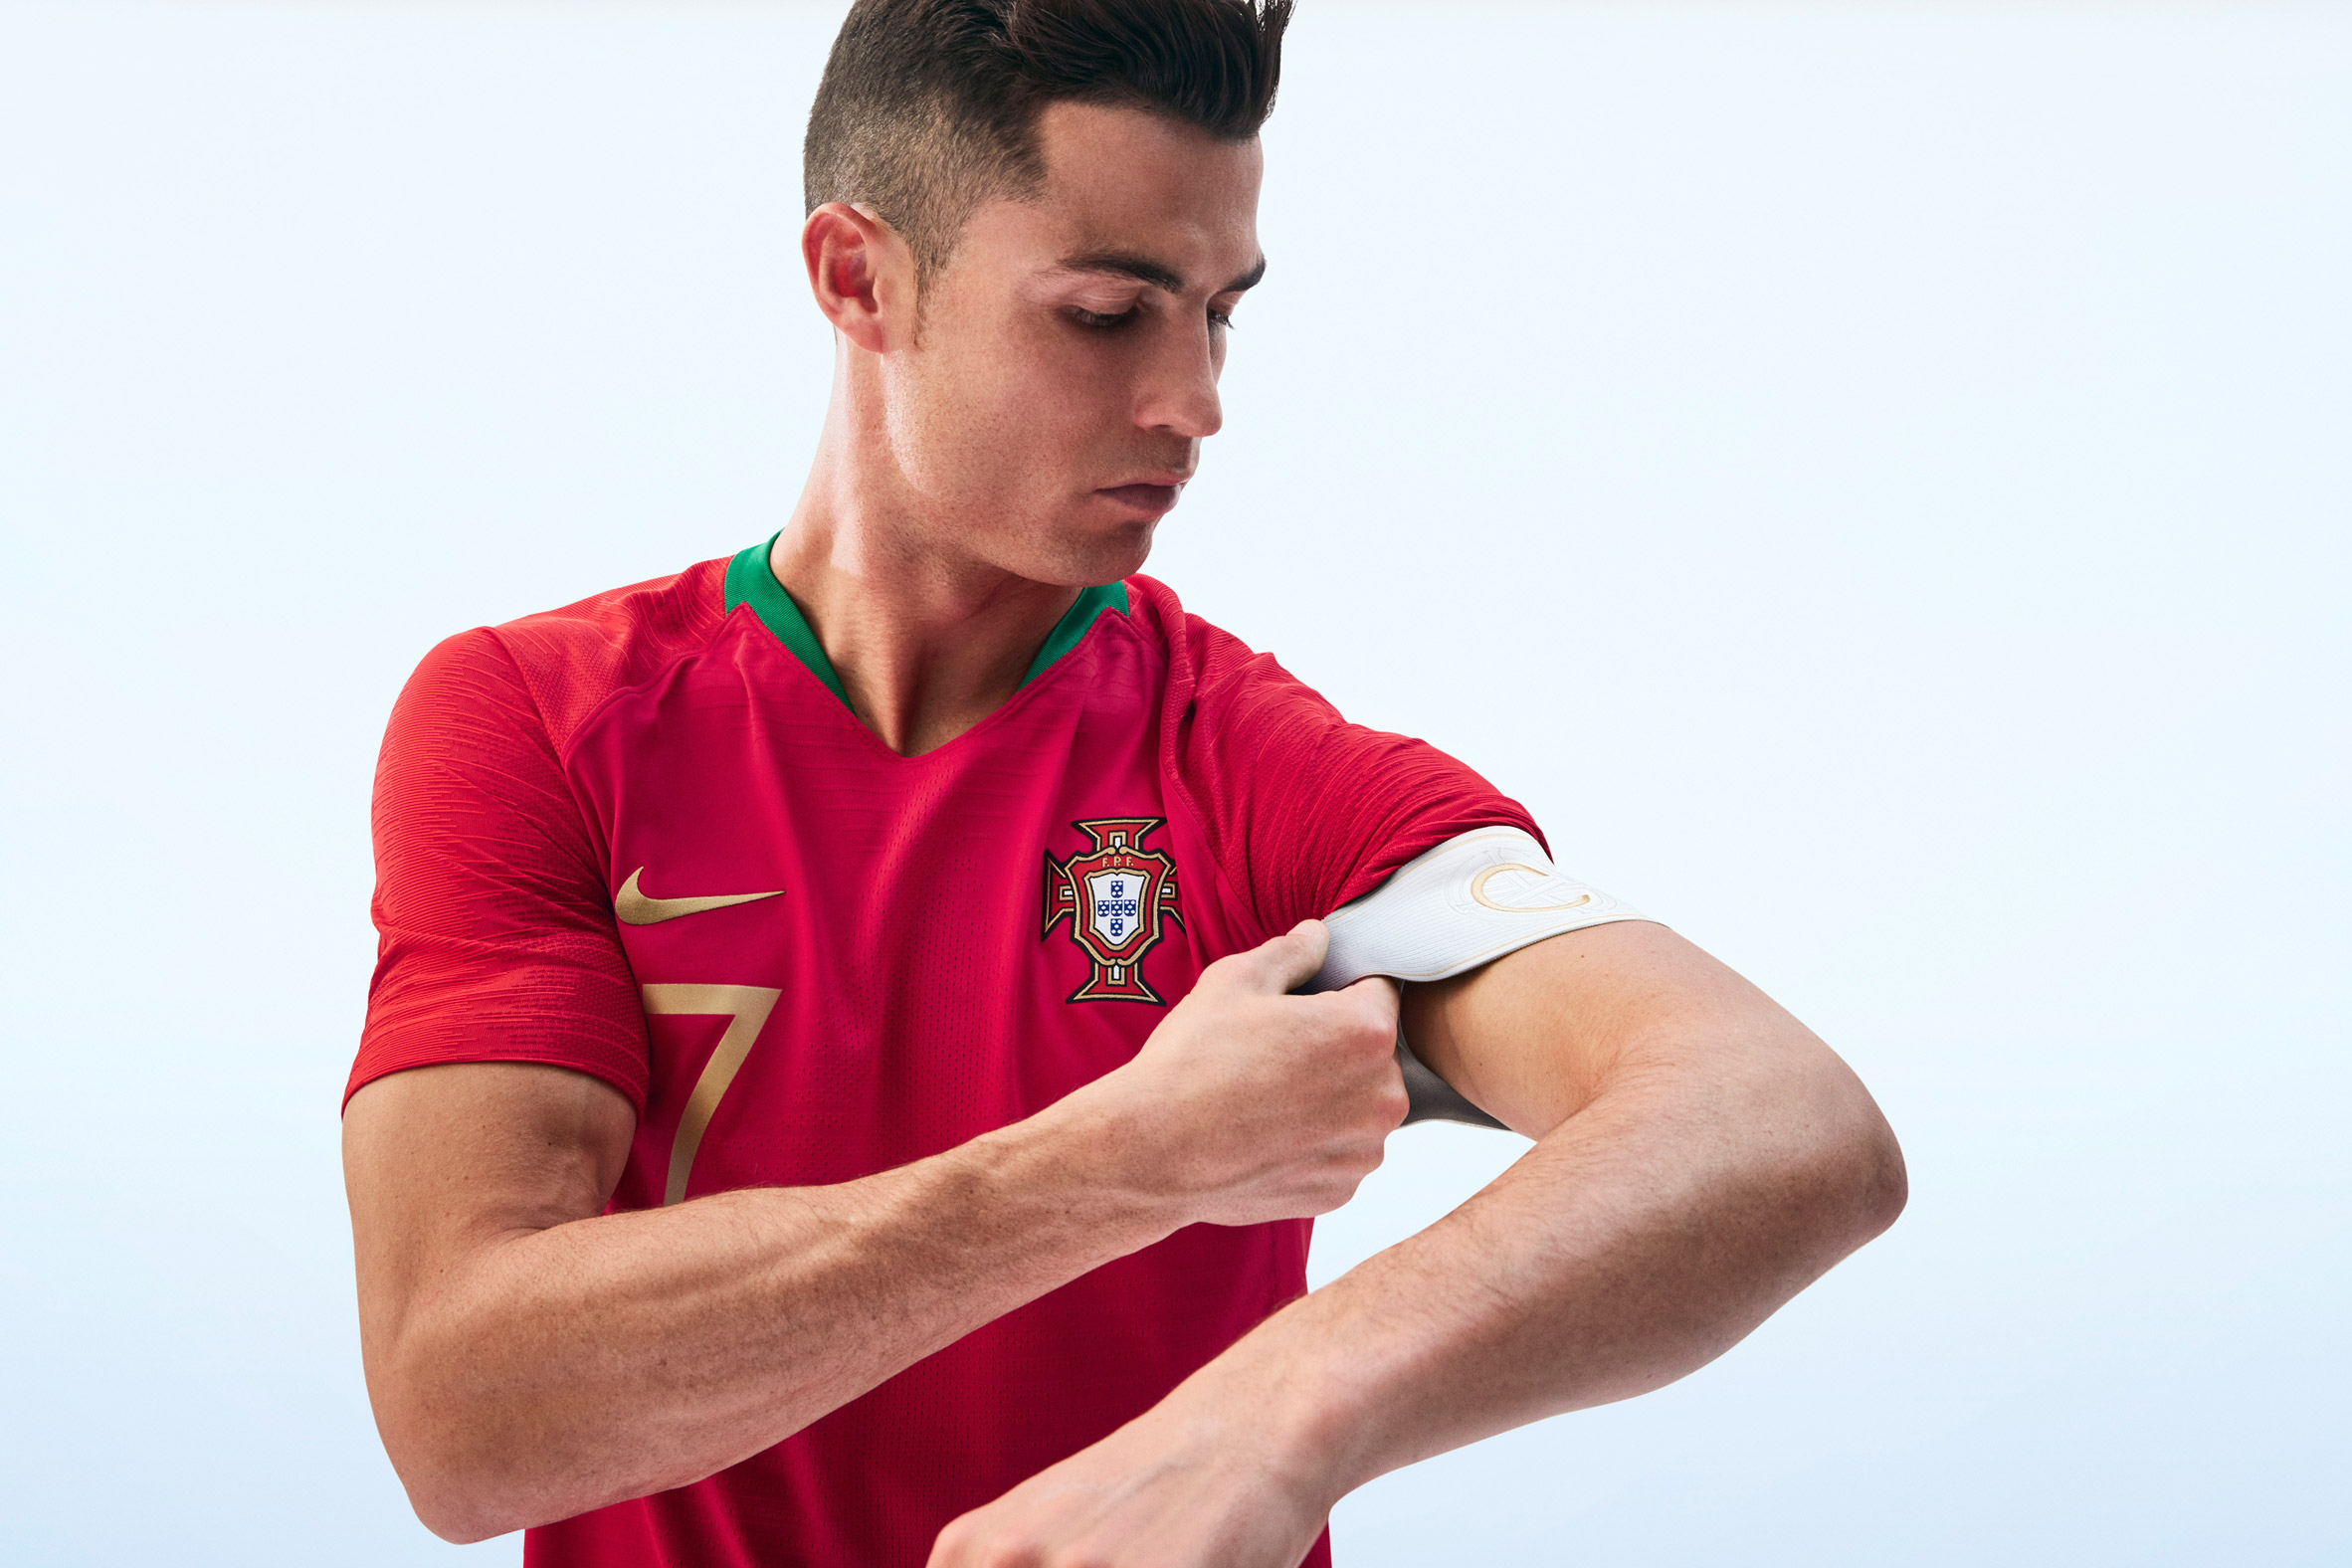 Gewond raken Concessie ondersteboven Portugal's World Cup 2018 strip celebrates team's recent victory in Europe